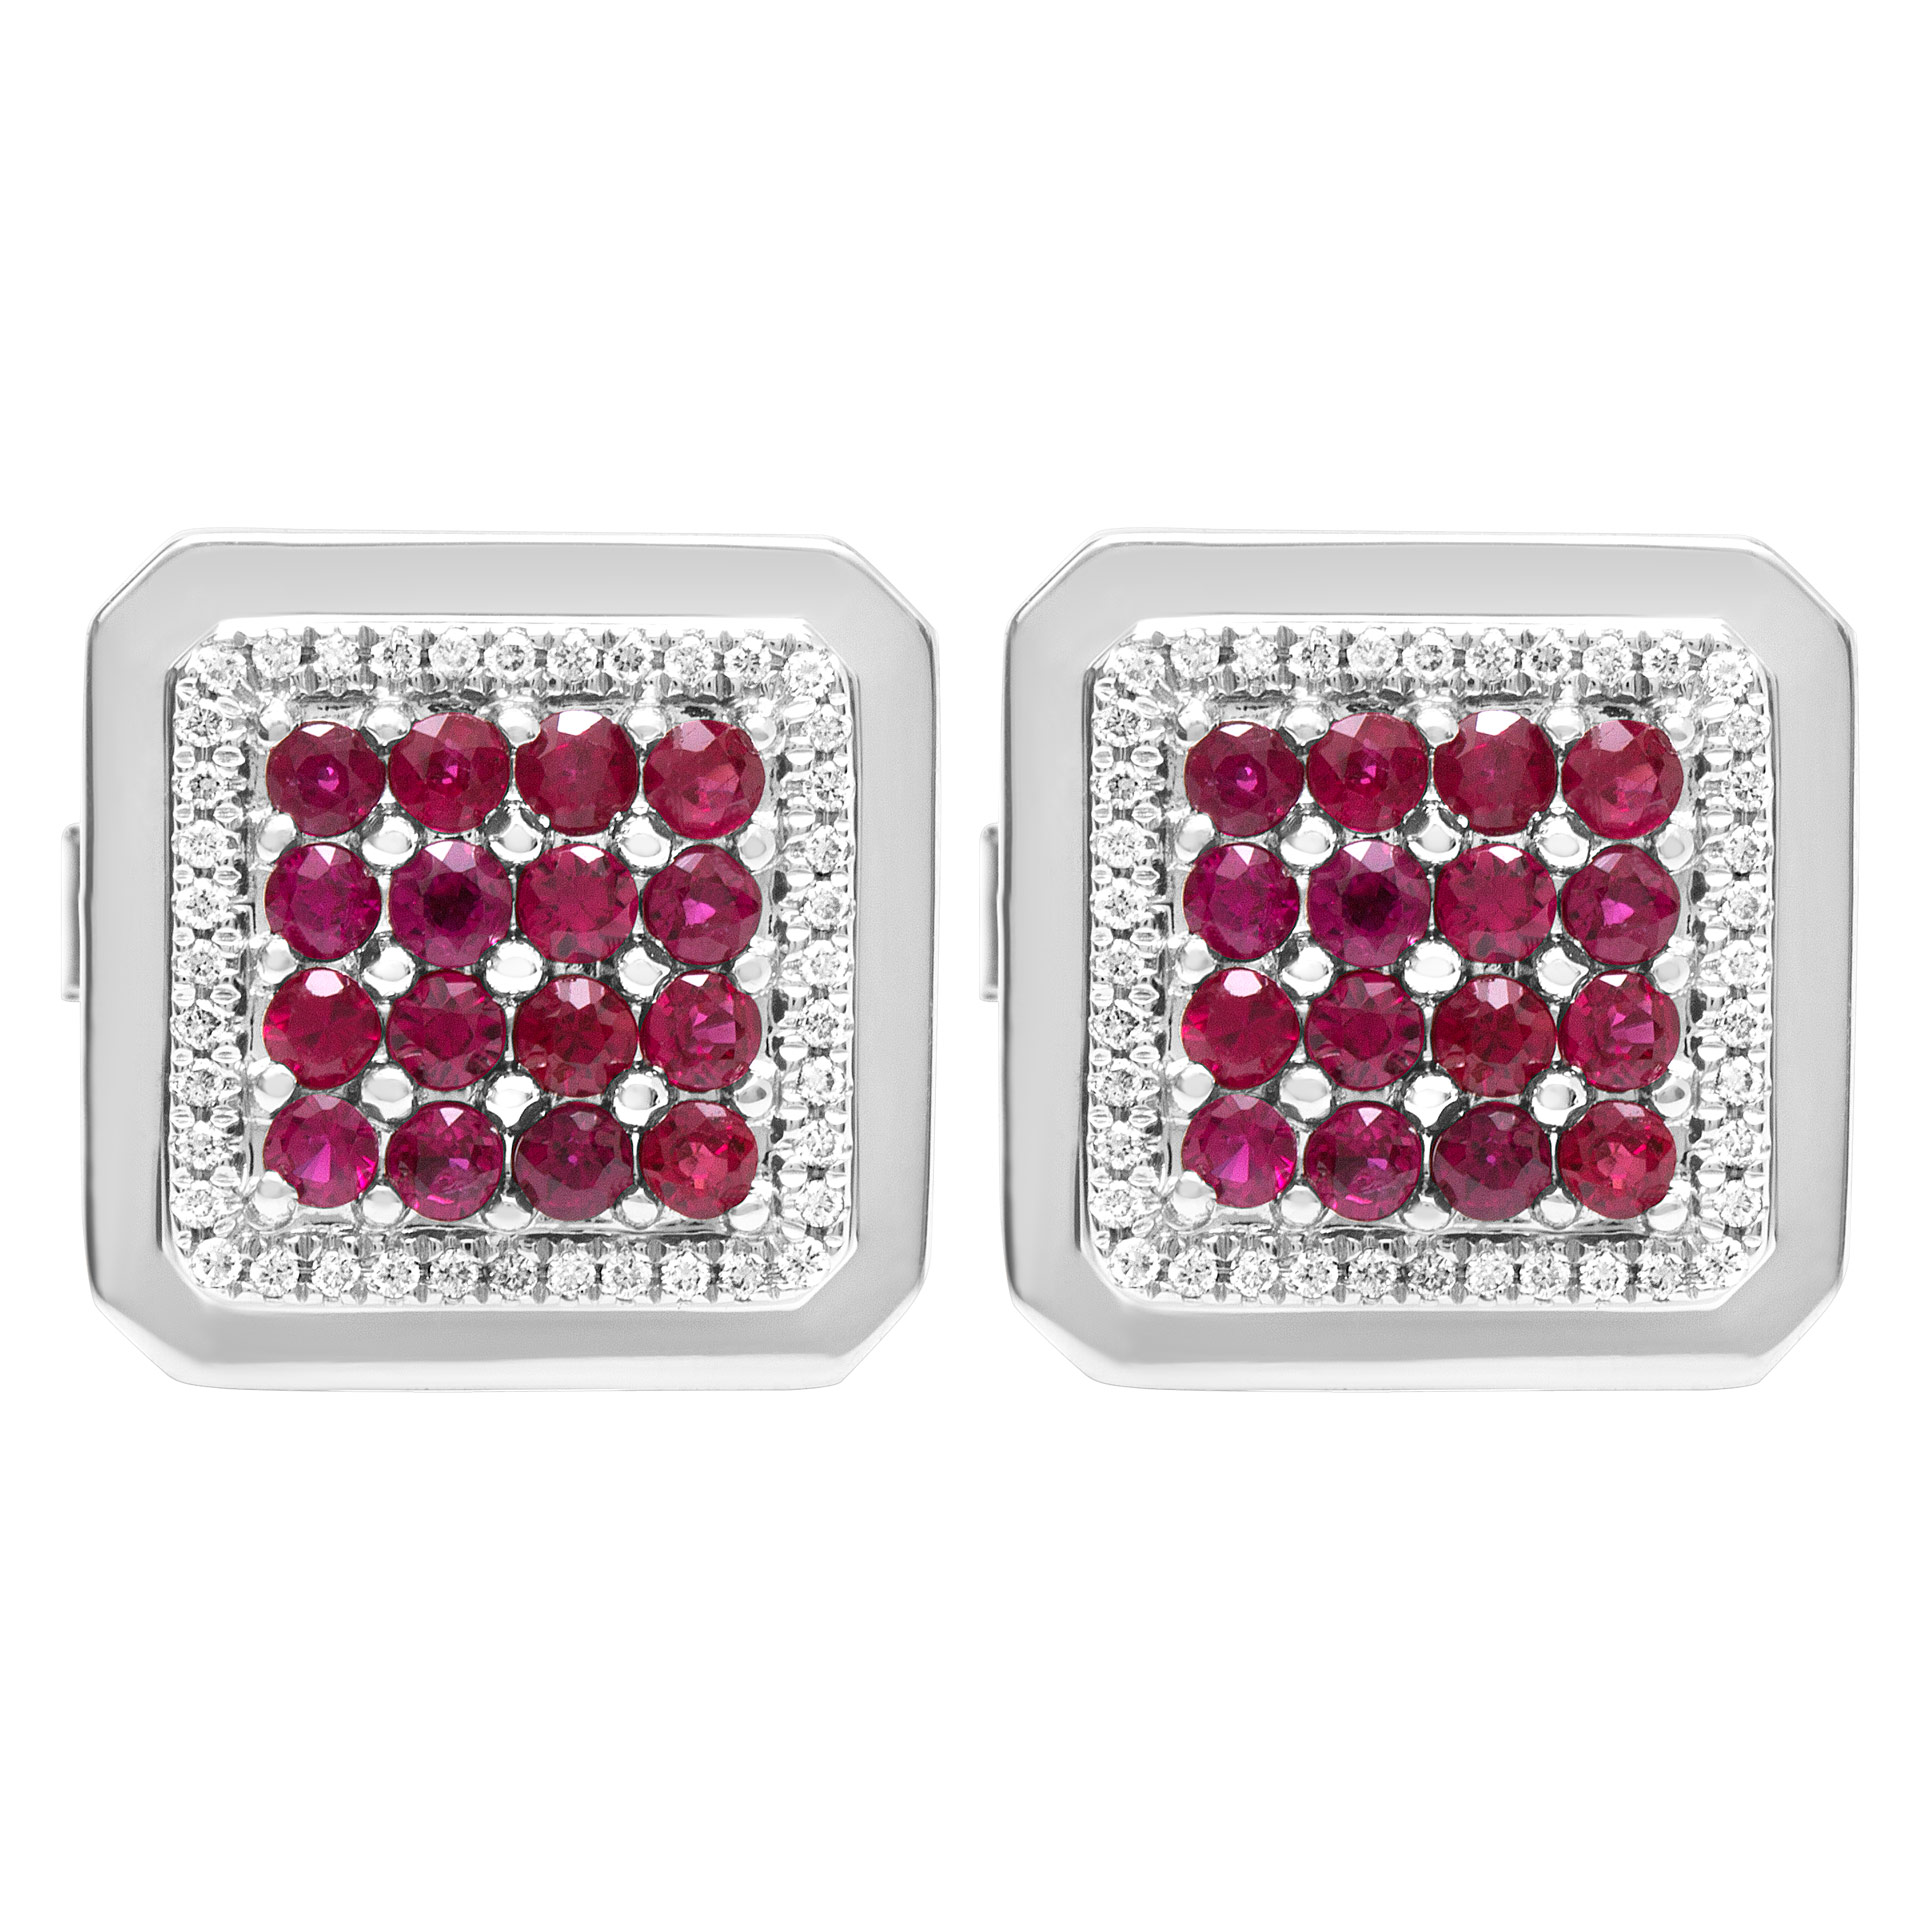 Regal ruby & diamond cufflinks in 18k white gold